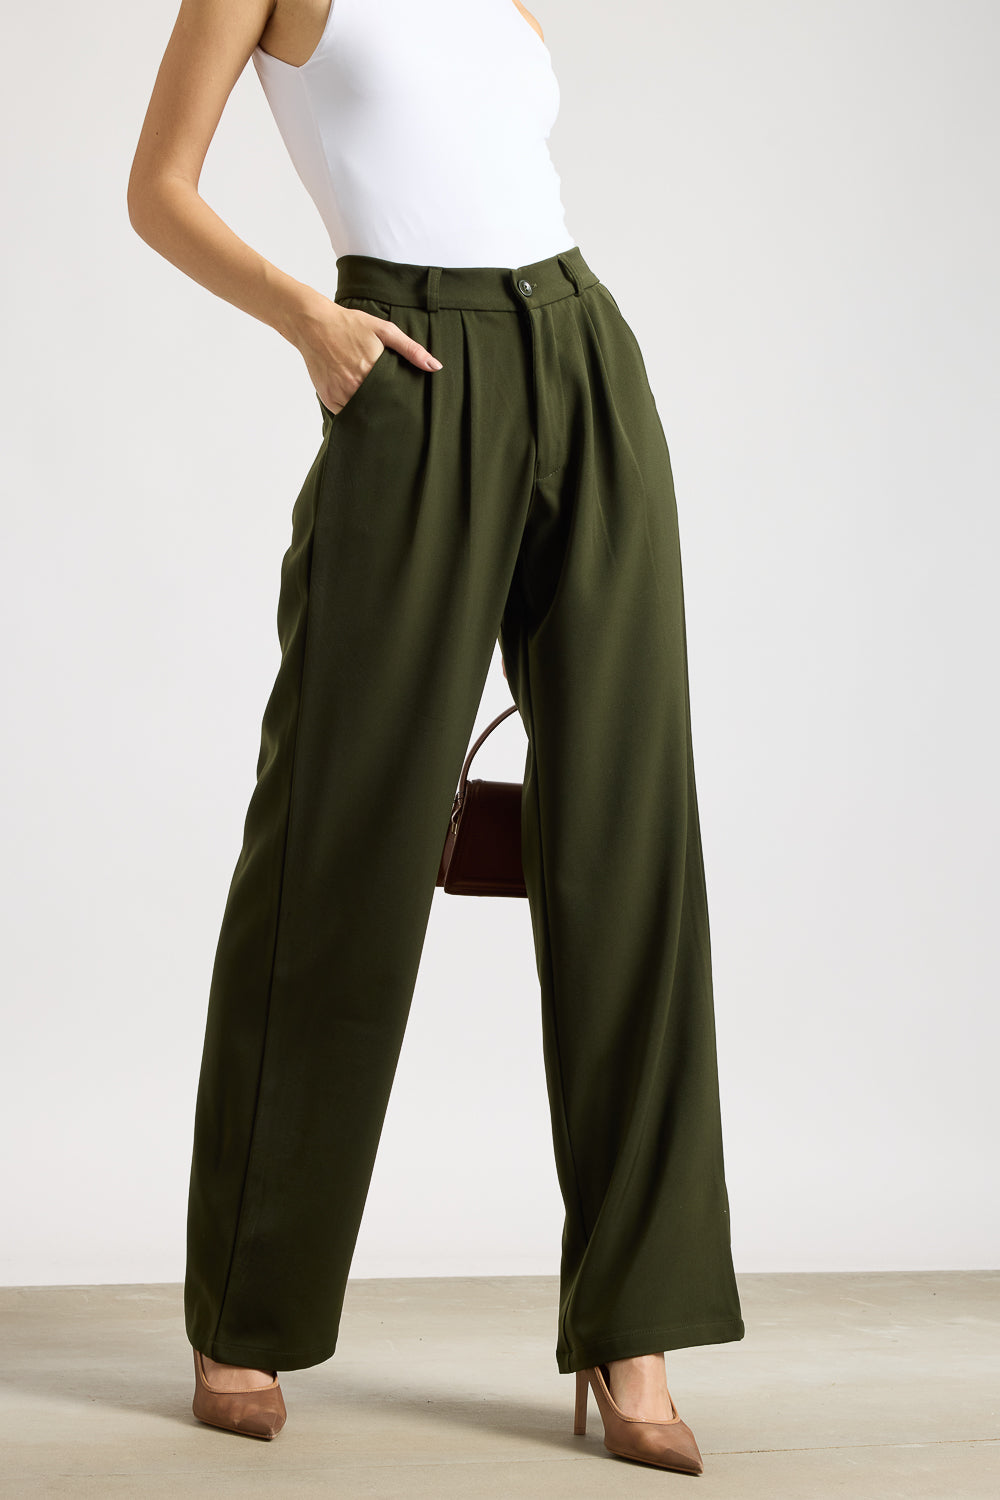 Women's Pleated Olive Korean Pants